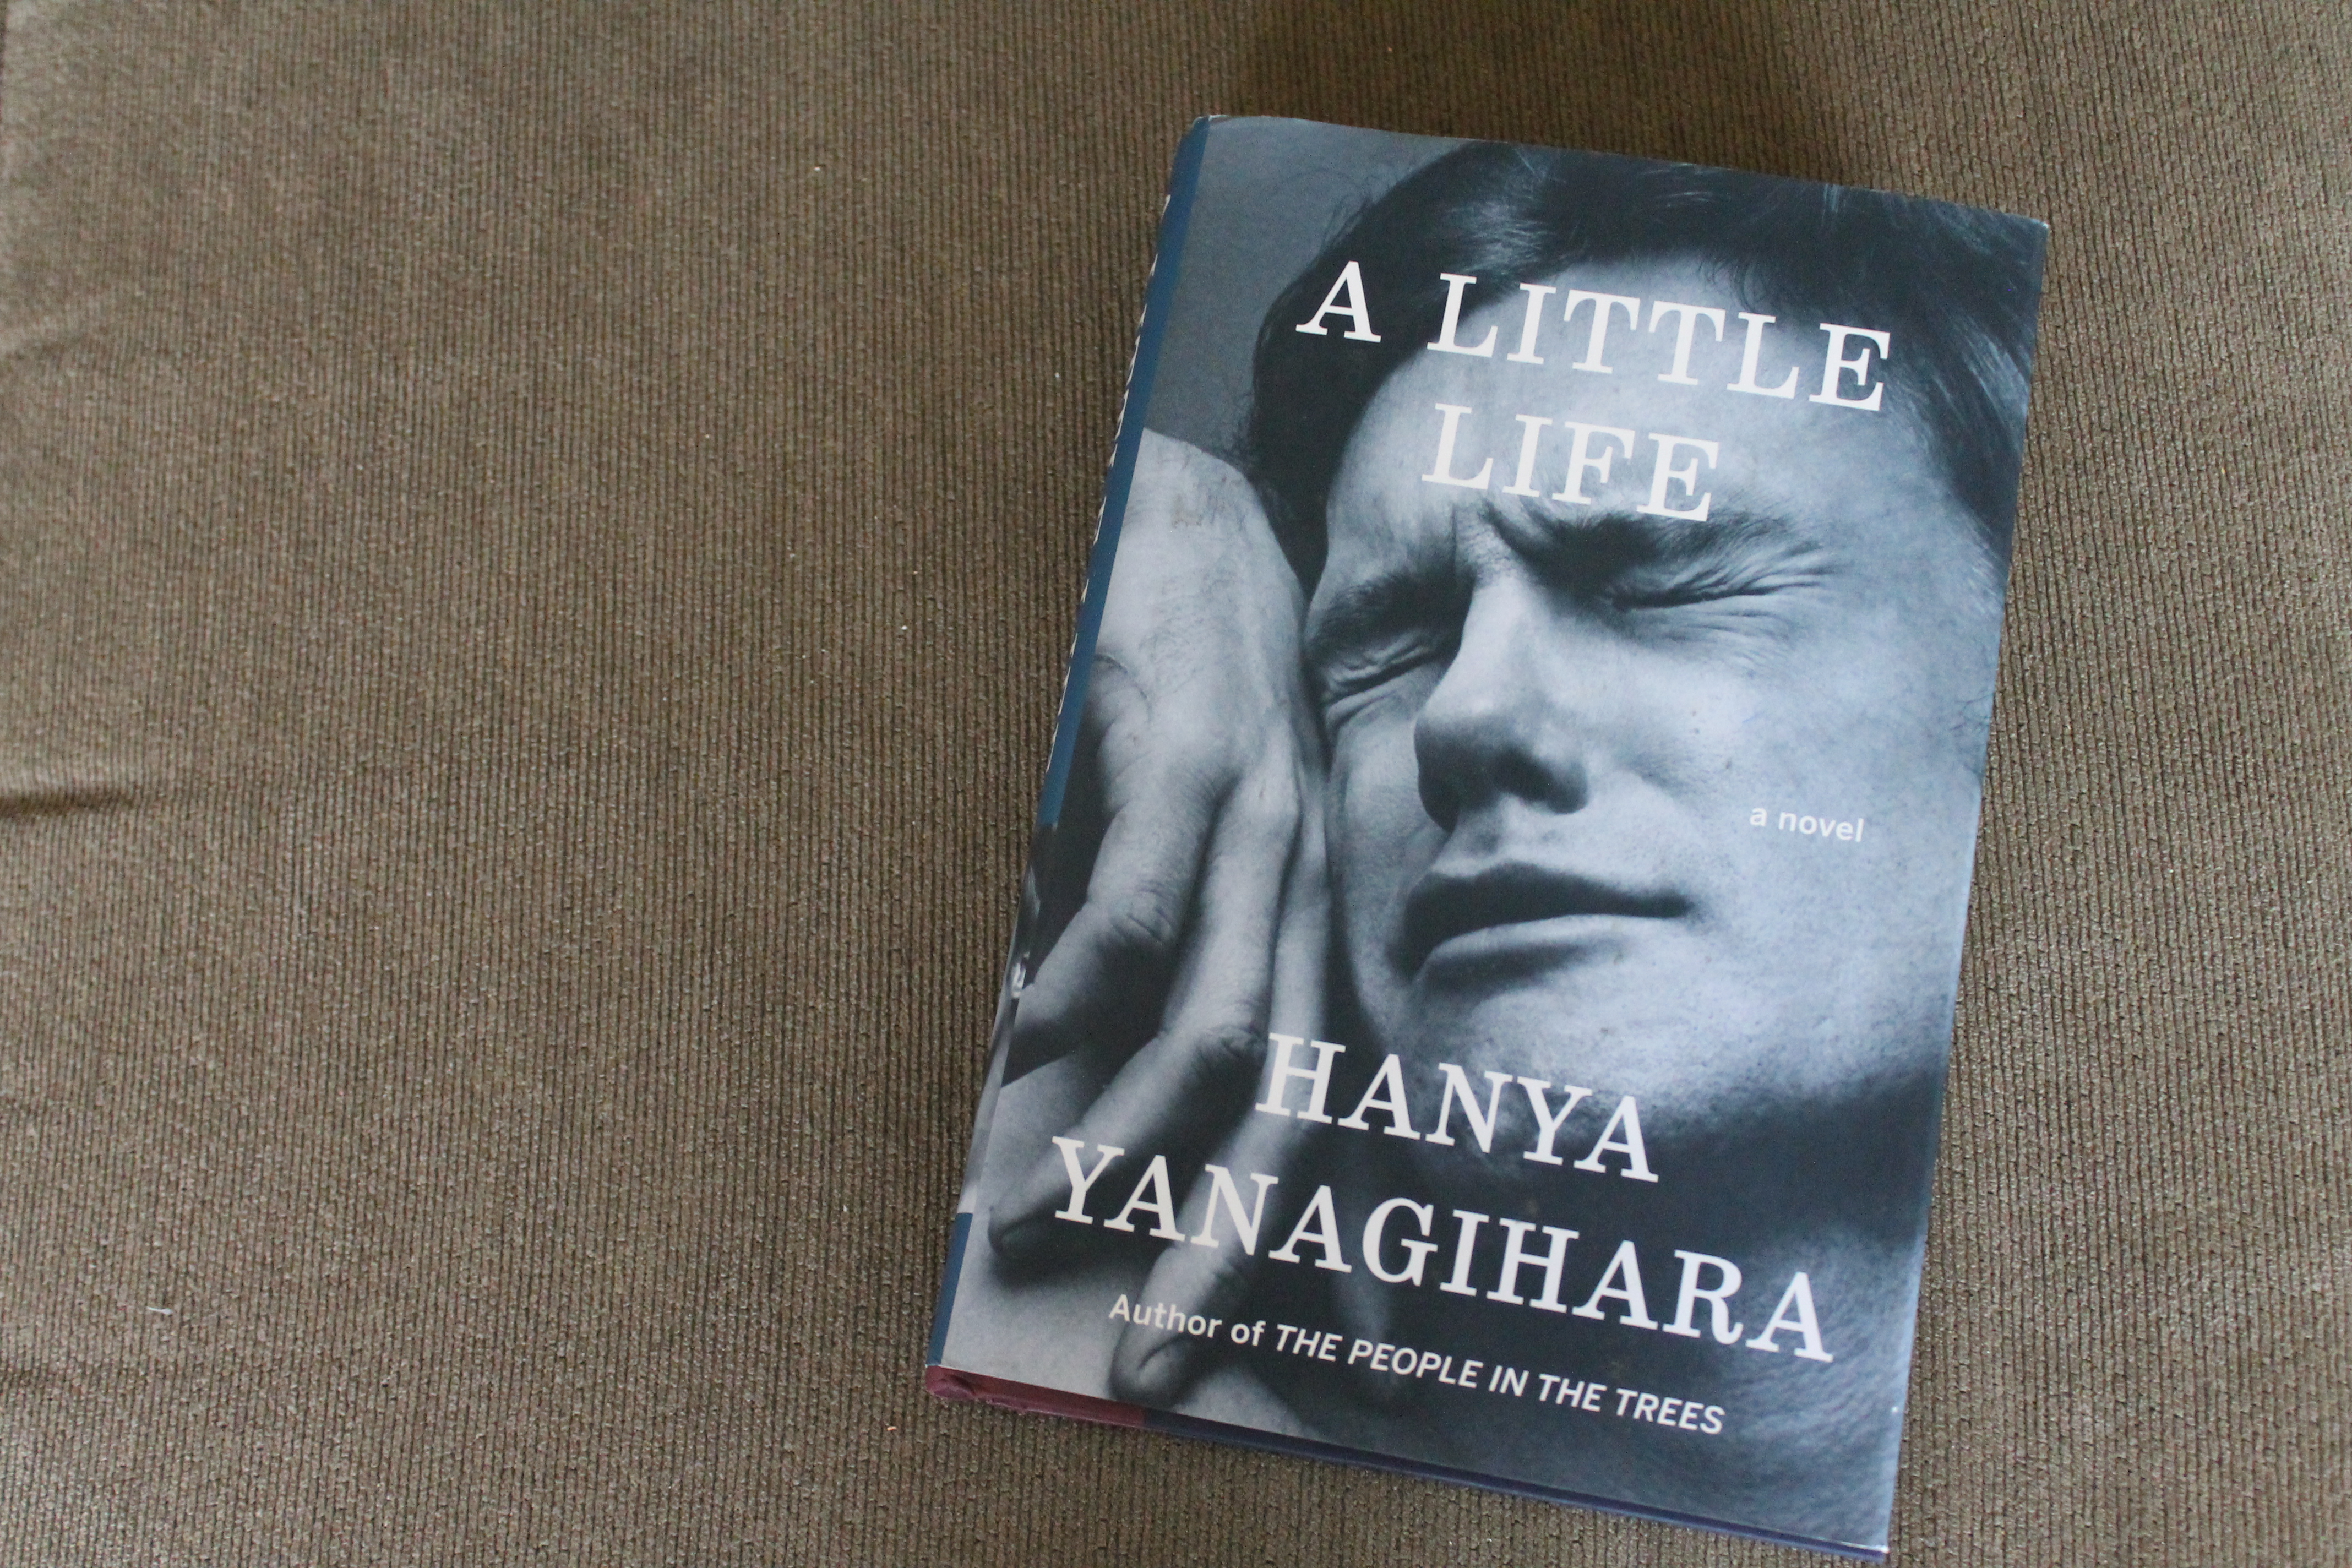 A Little Life', by Hanya Yanagihara